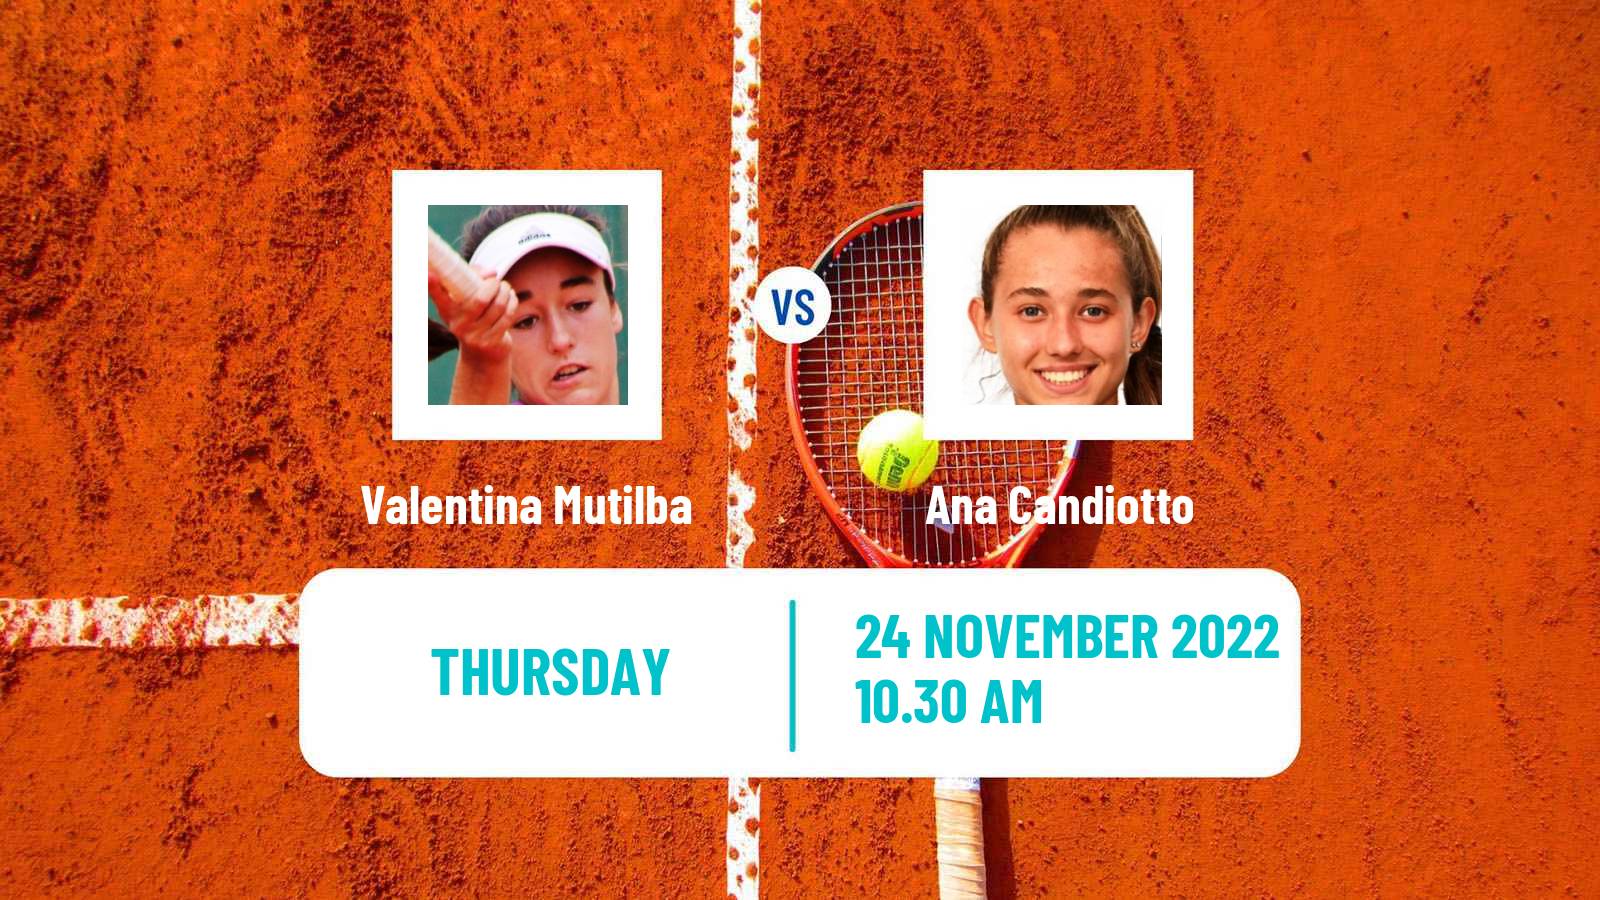 Tennis ITF Tournaments Valentina Mutilba - Ana Candiotto